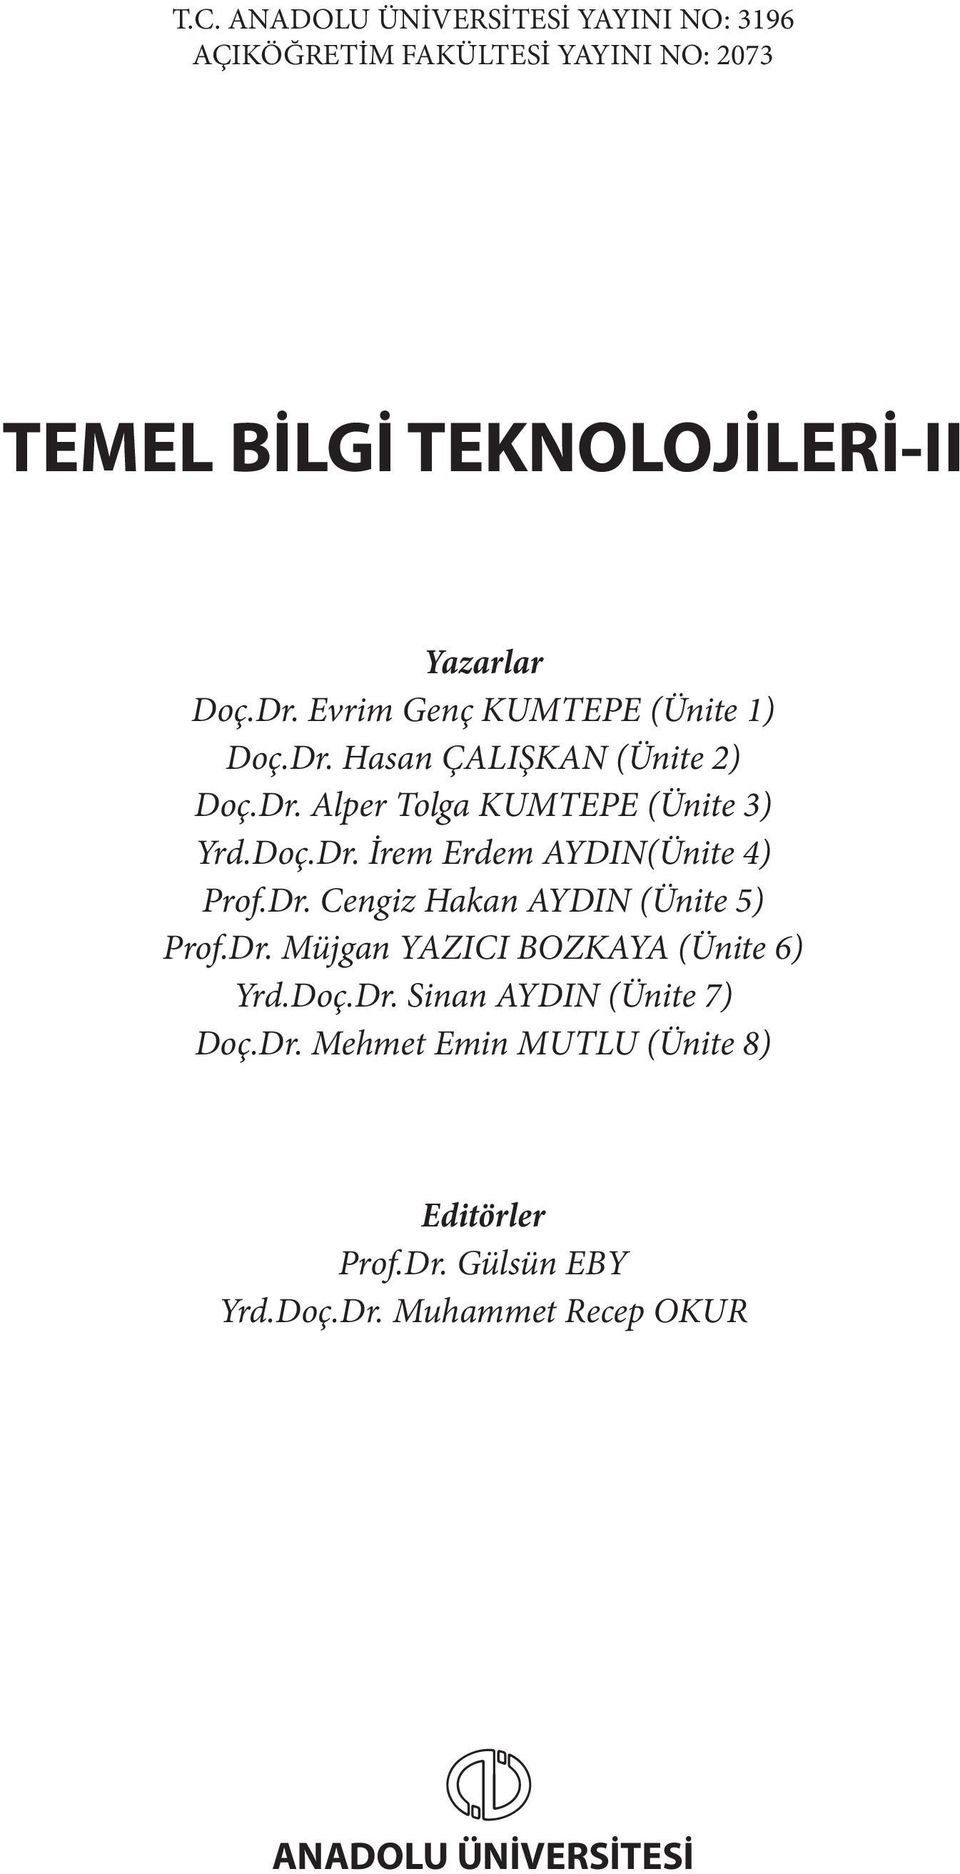 Dr. Cengiz Hakan AYDIN (Ünite 5) Prof.Dr. Müjgan YAZICI BOZKAYA (Ünite 6) Yrd.Doç.Dr. Sinan AYDIN (Ünite 7) Doç.Dr. Mehmet Emin MUTLU (Ünite 8) Editörler Prof.